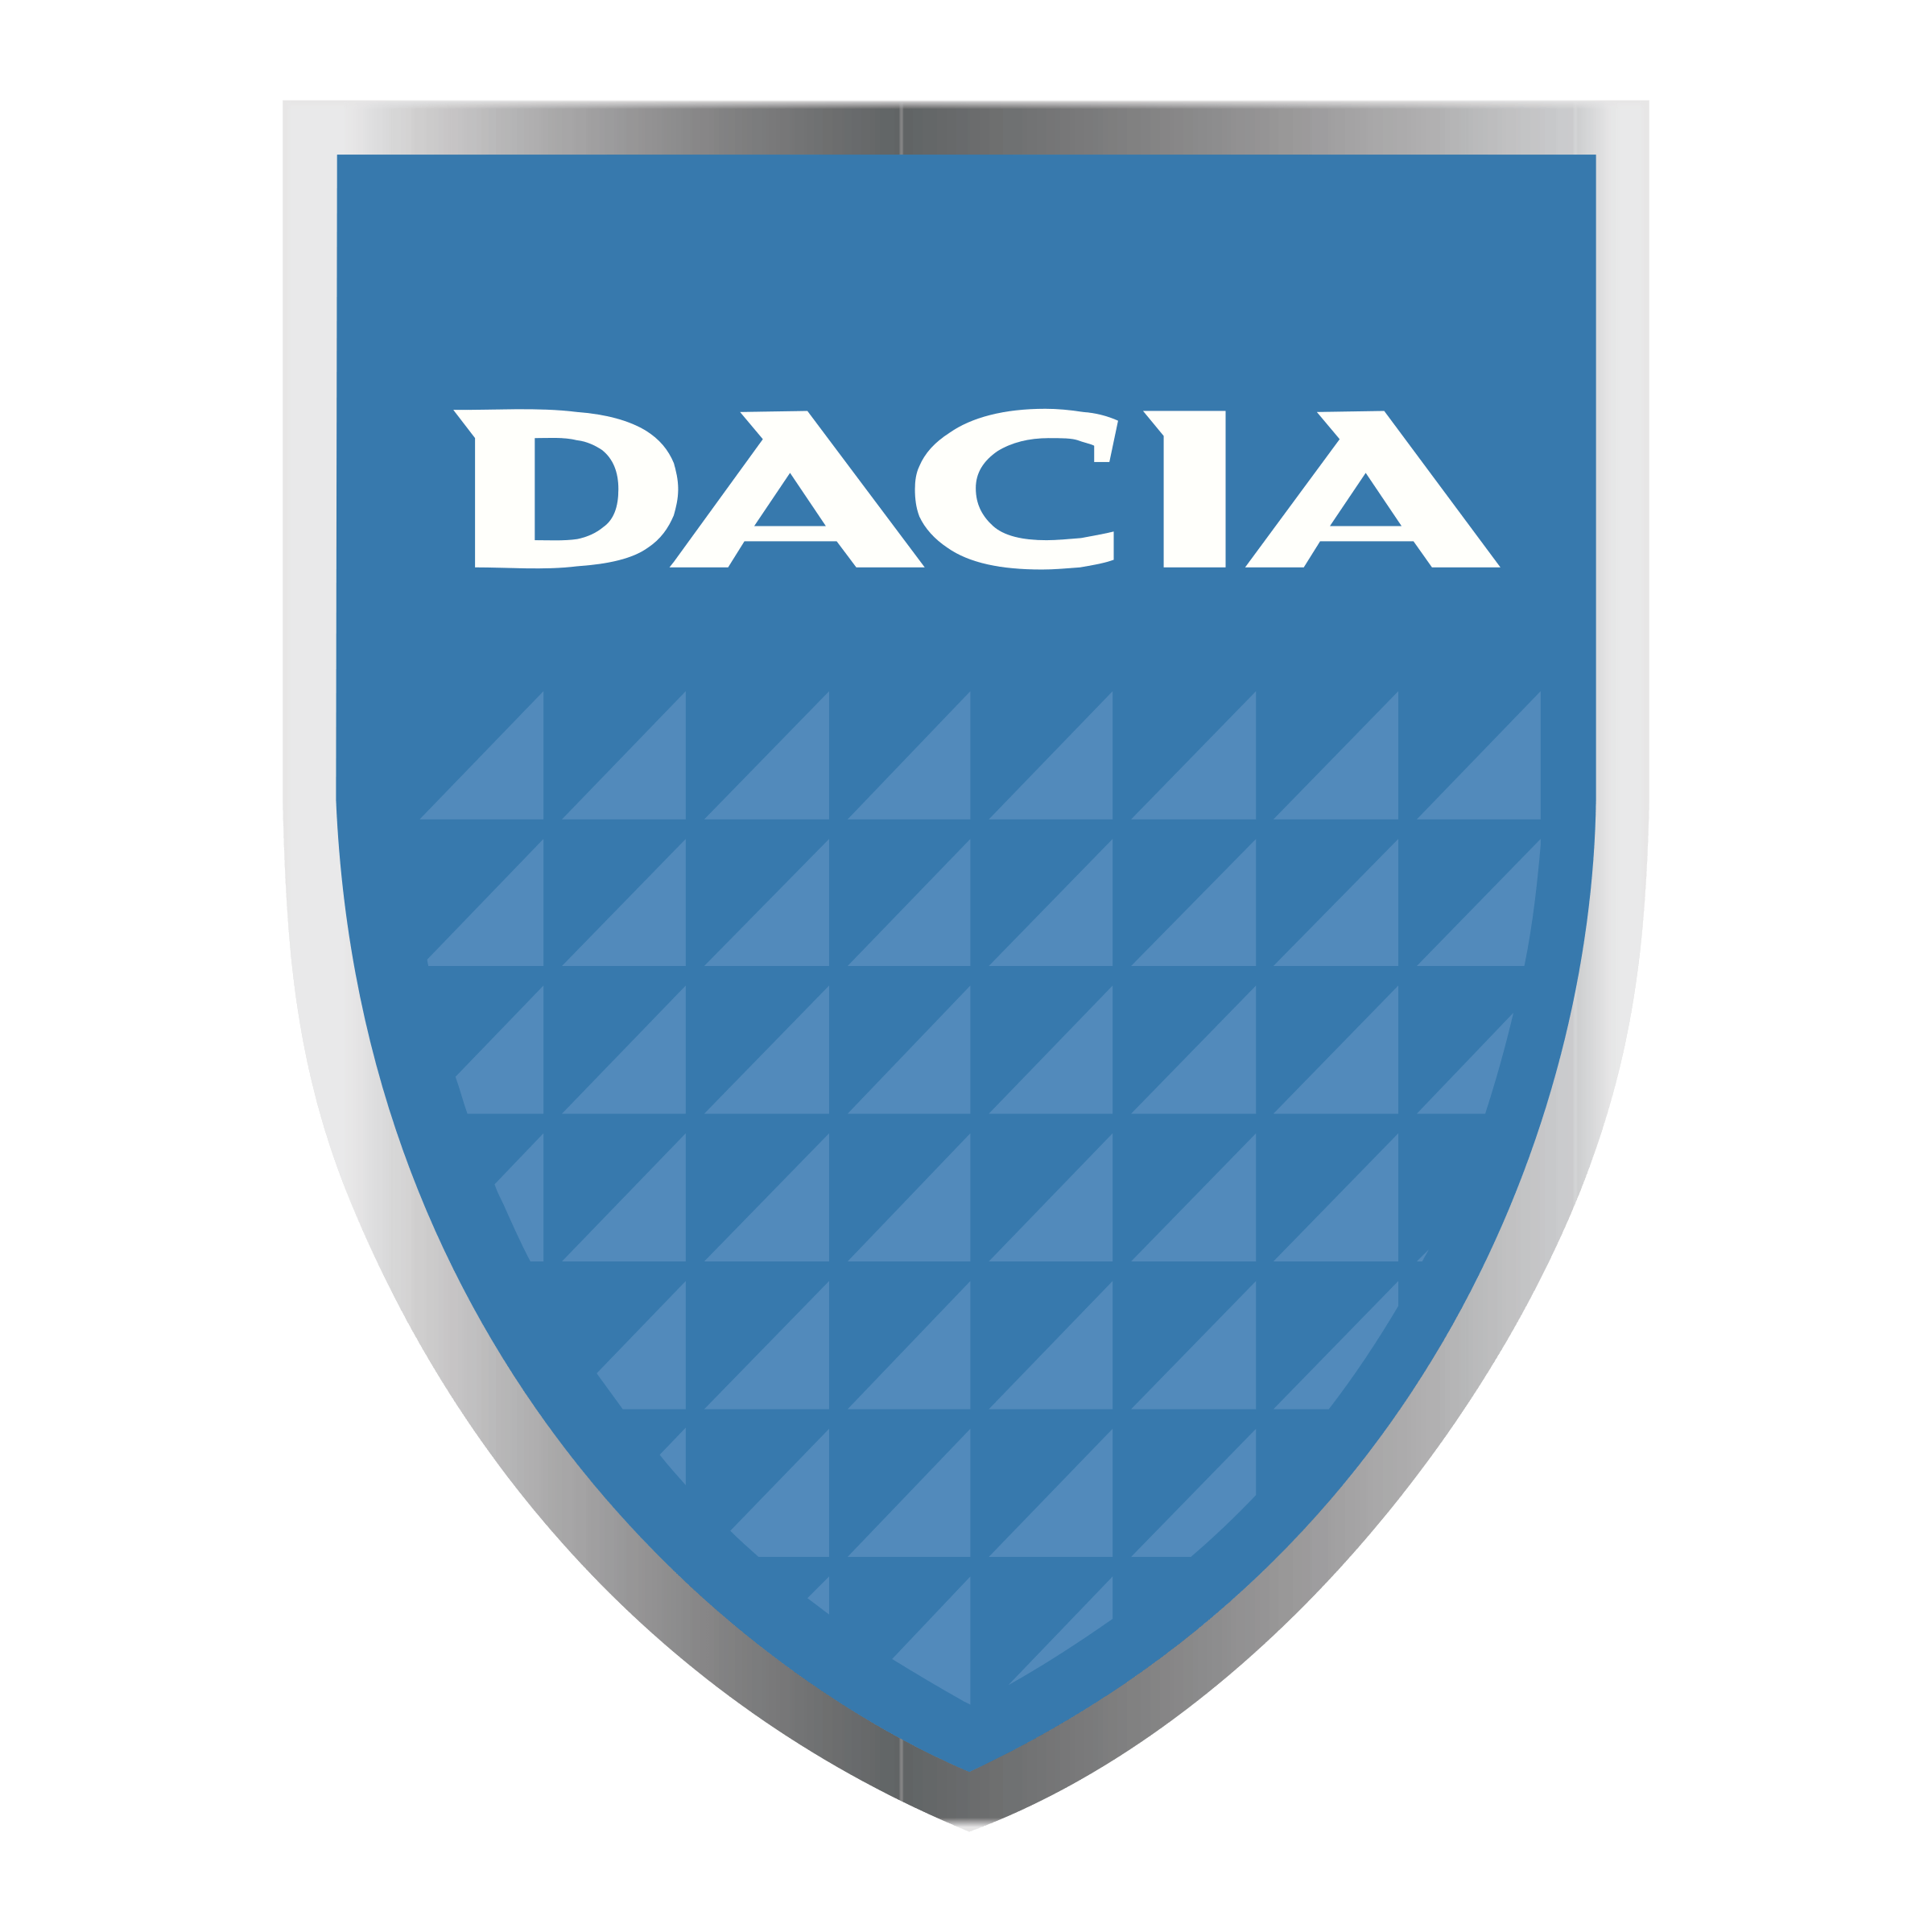 Dacia Logo - Dacia Logo PNG Transparent & SVG Vector - Freebie Supply